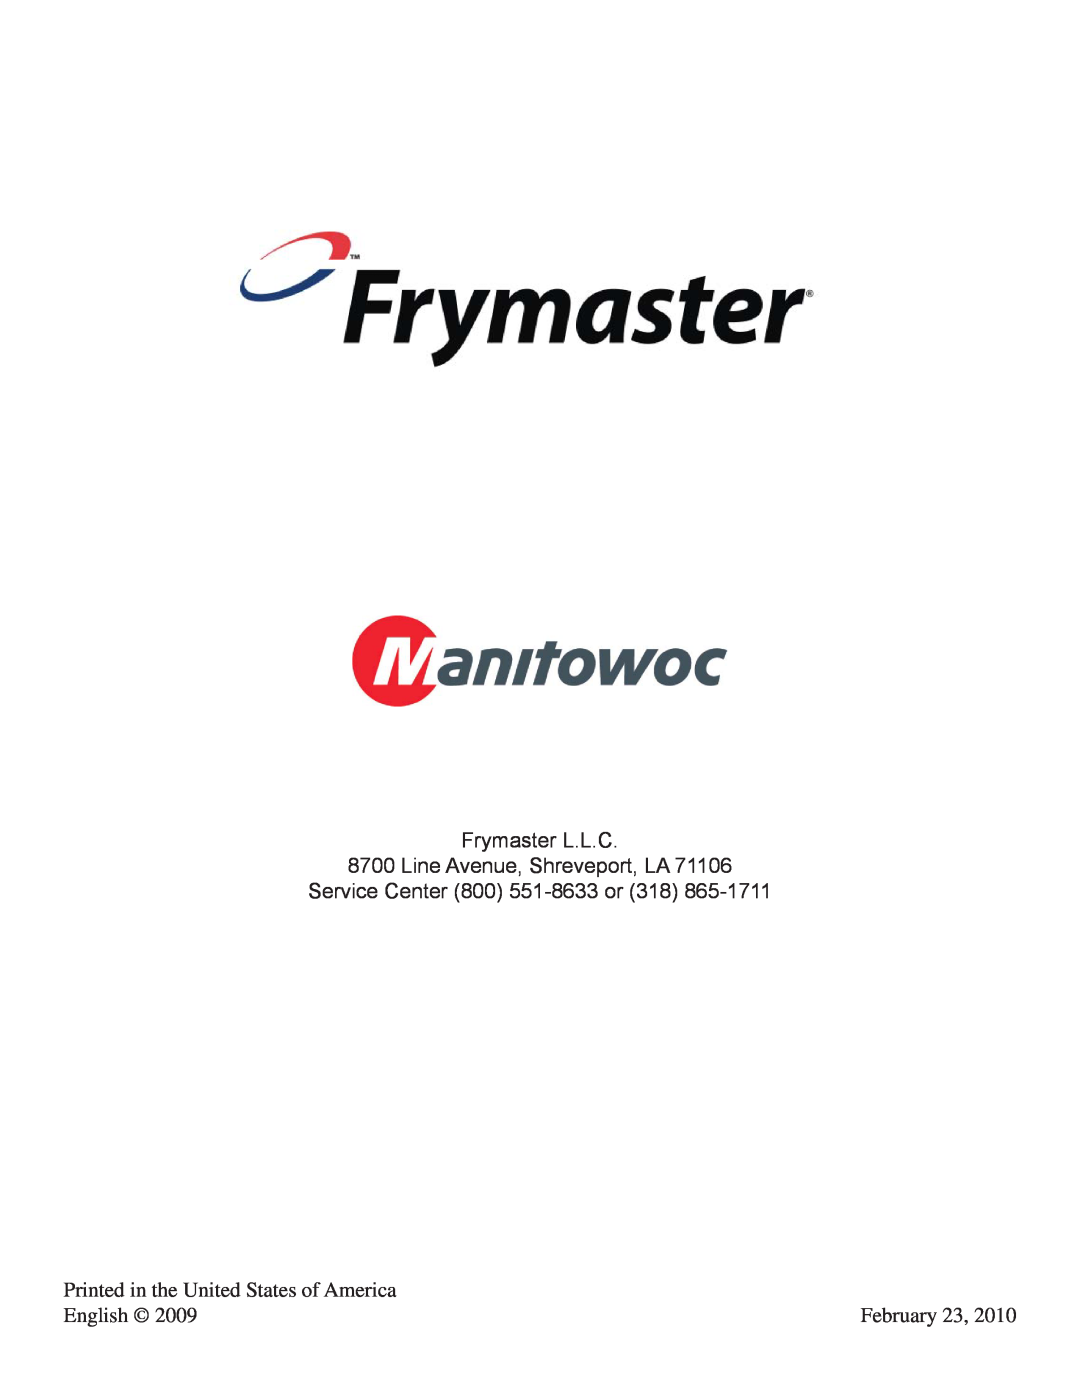 Frymaster M3000 manual Frymaster L.L.C 8700 Line Avenue, Shreveport, LA, Service Center 800 551-8633 or, English, February 